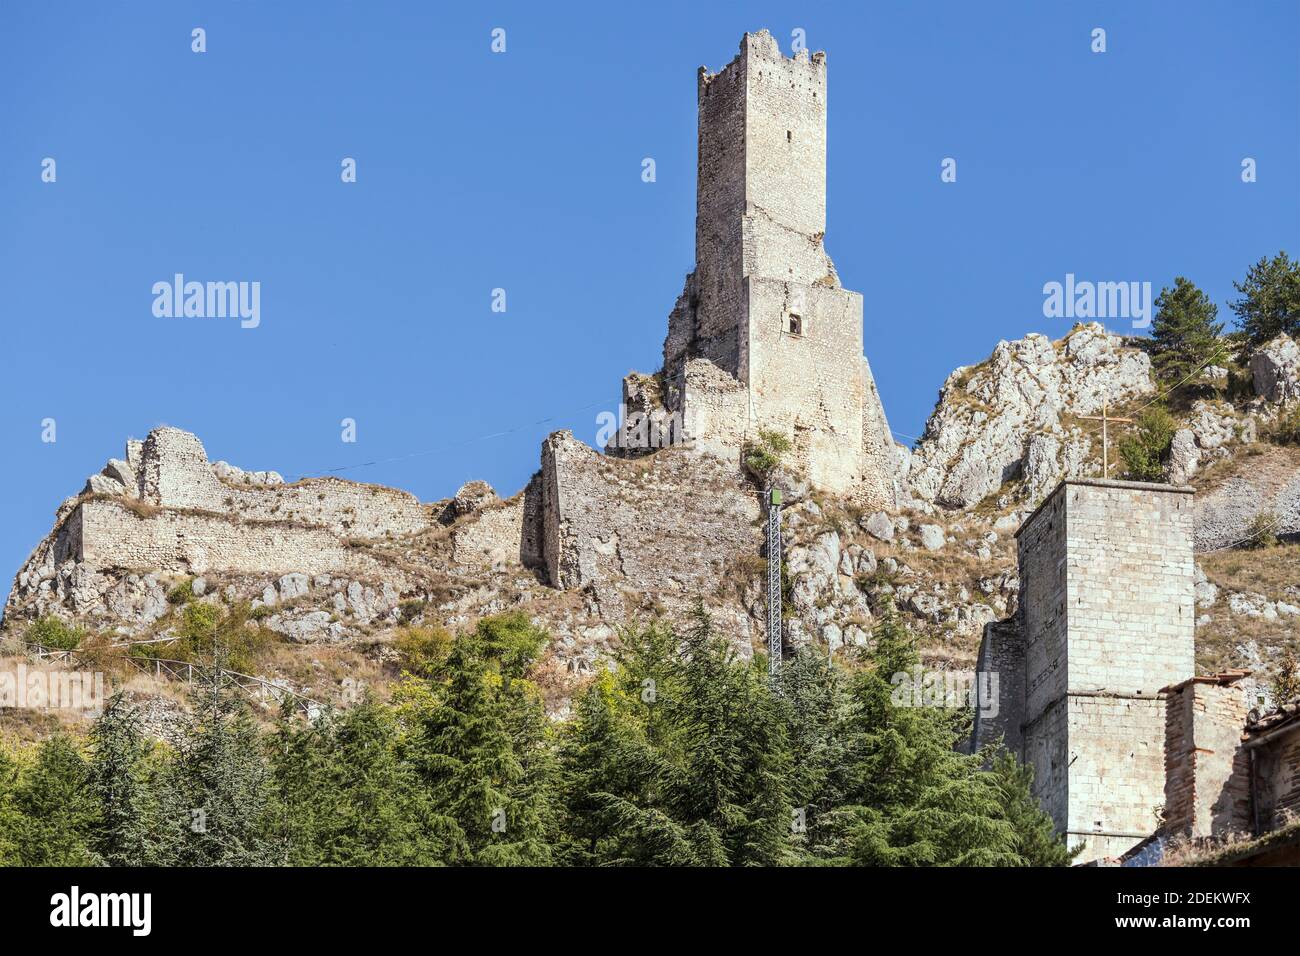 cityscape with Piccolomini tower and castle ruins at historical village, shot in bright light at Pescina, L'Aquila, Abruzzo, Italy Stock Photo